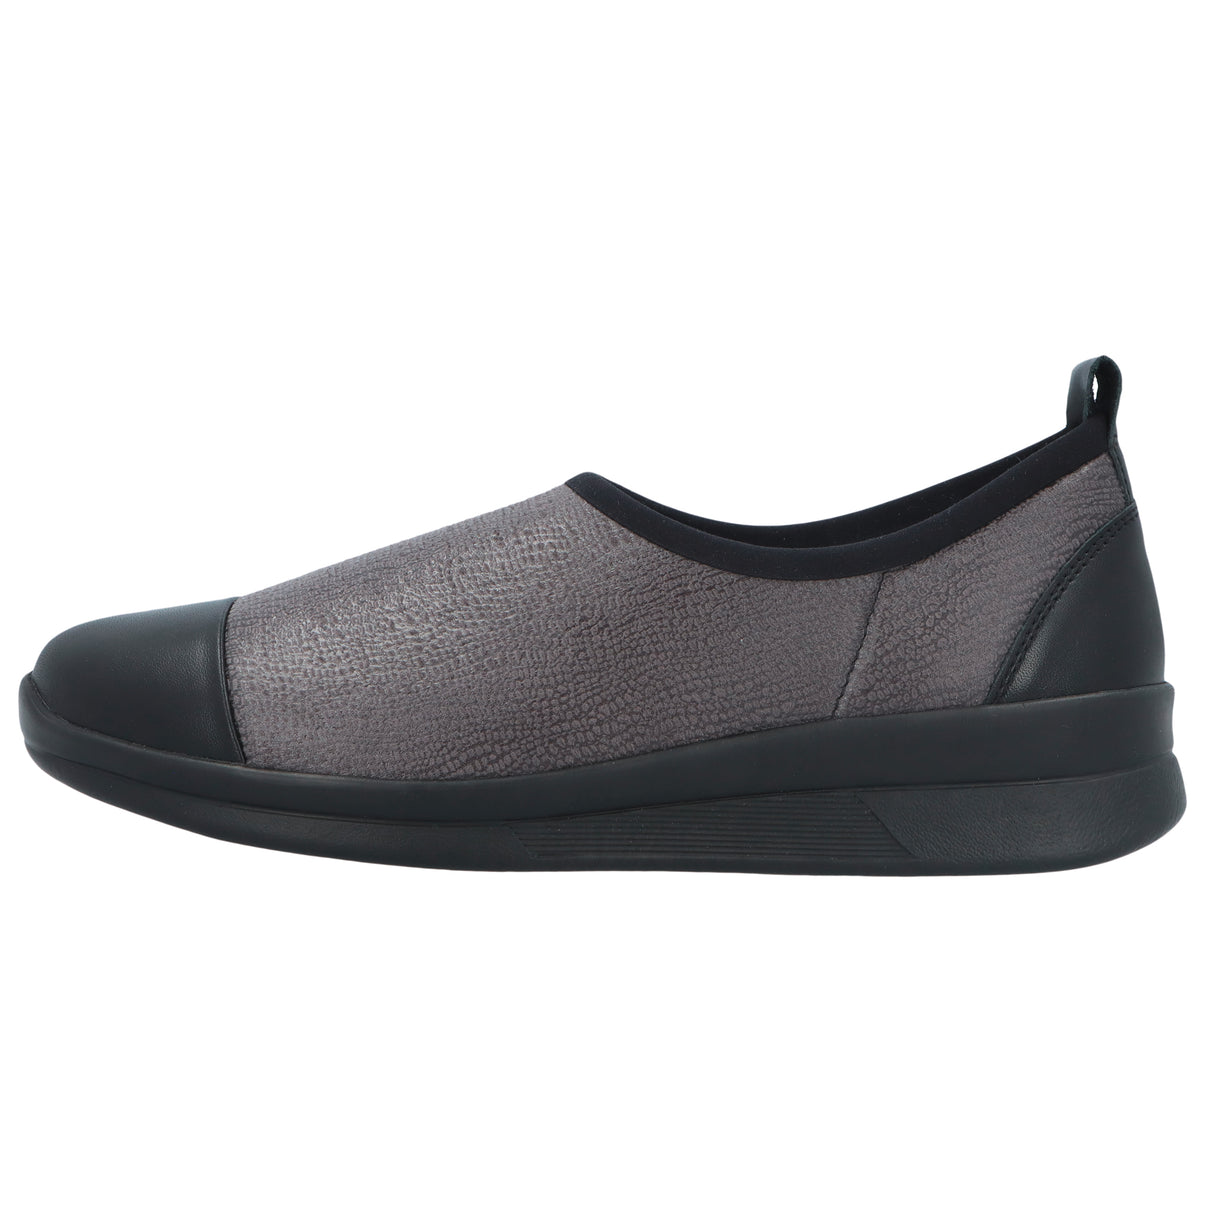 BRISTLES | Ballet shoes | Graphite gray